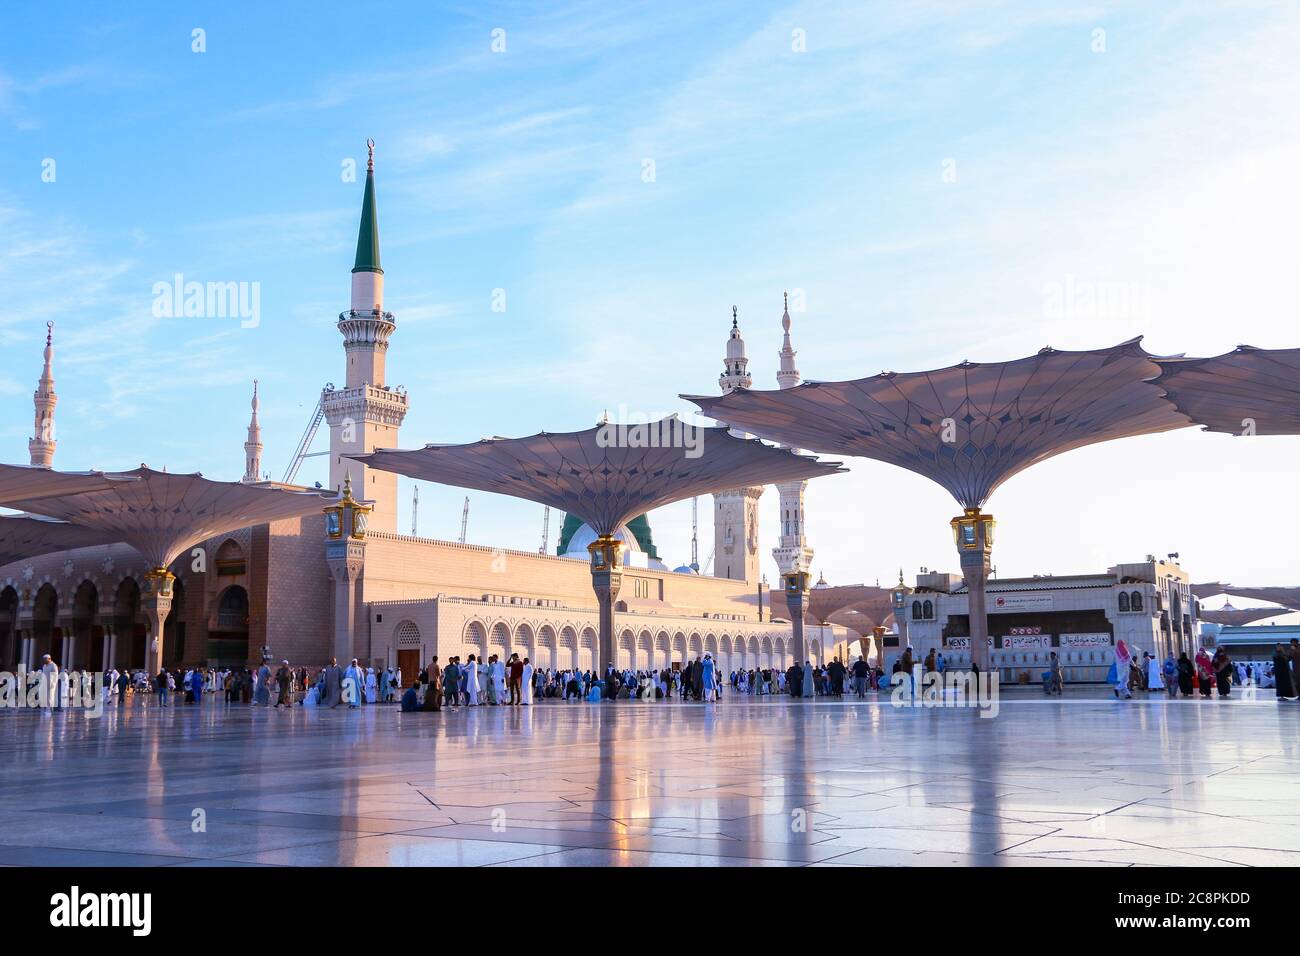 Medina / Arabia Saudita - 13 Dic 2019: Moschea del profeta Maometto - al Masjid an Nabawi - Medina - Arabia Saudita Foto Stock